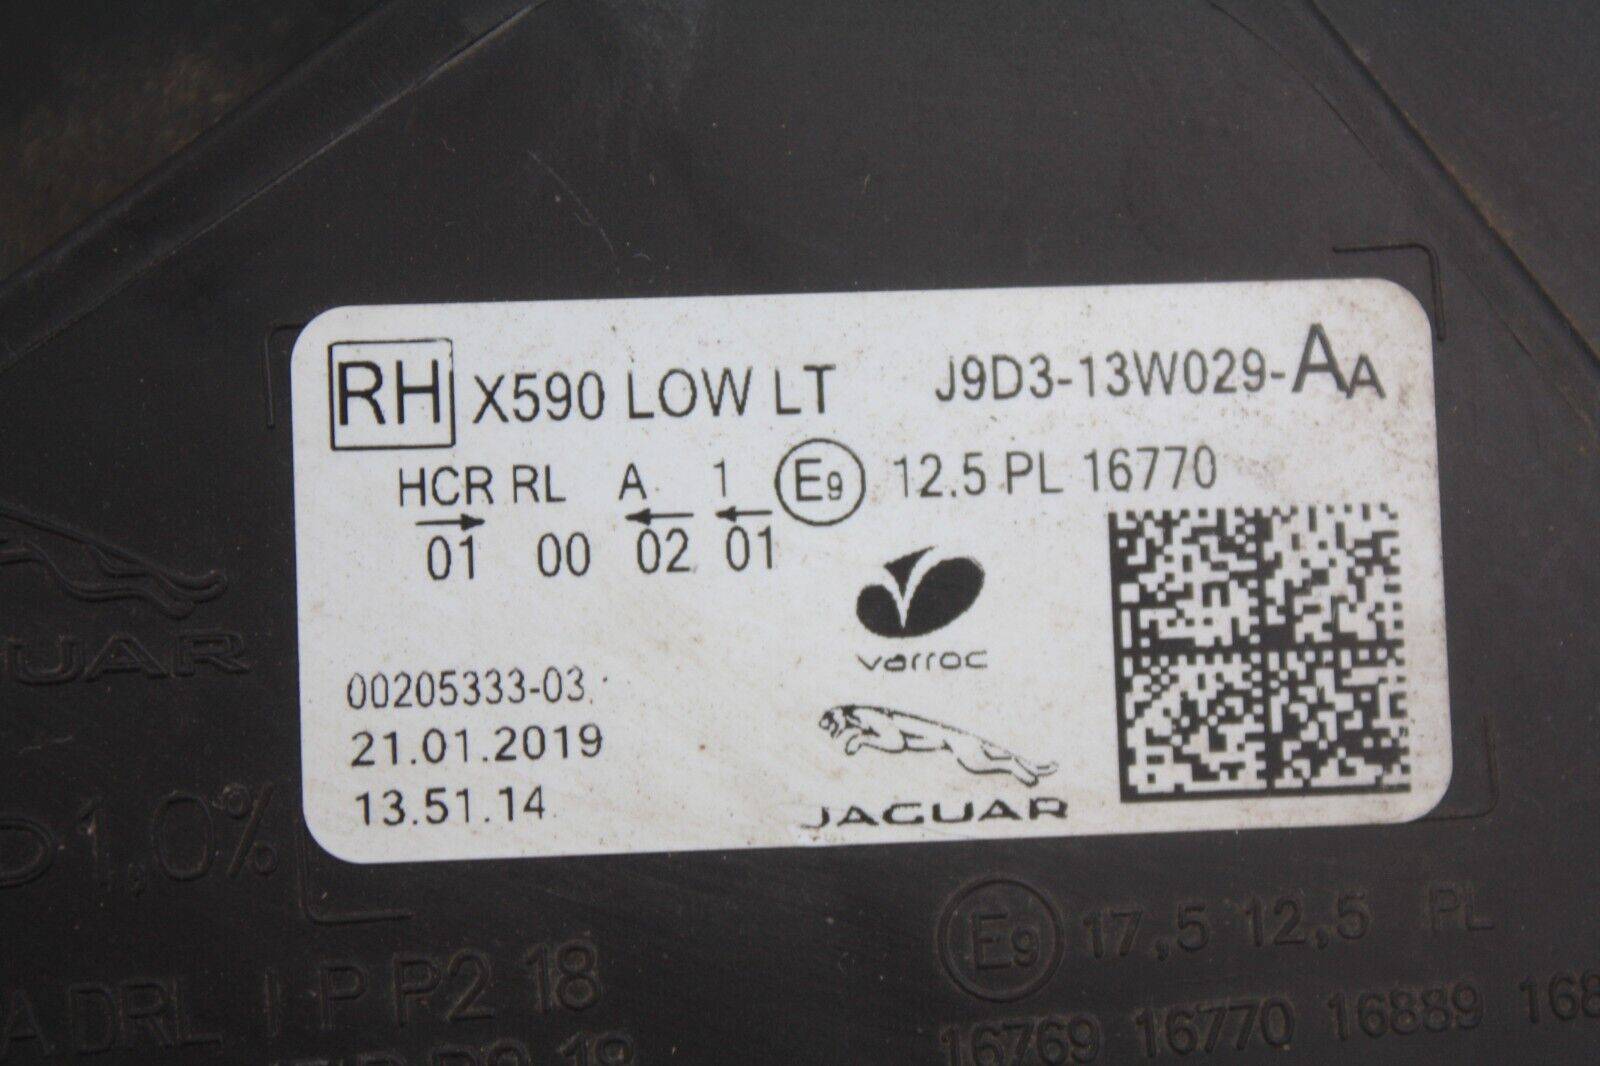 Jaguar-I-Pace-X590-Right-Side-LED-Headlight-J9D3-13W029-AA-Genuine-175833089601-6